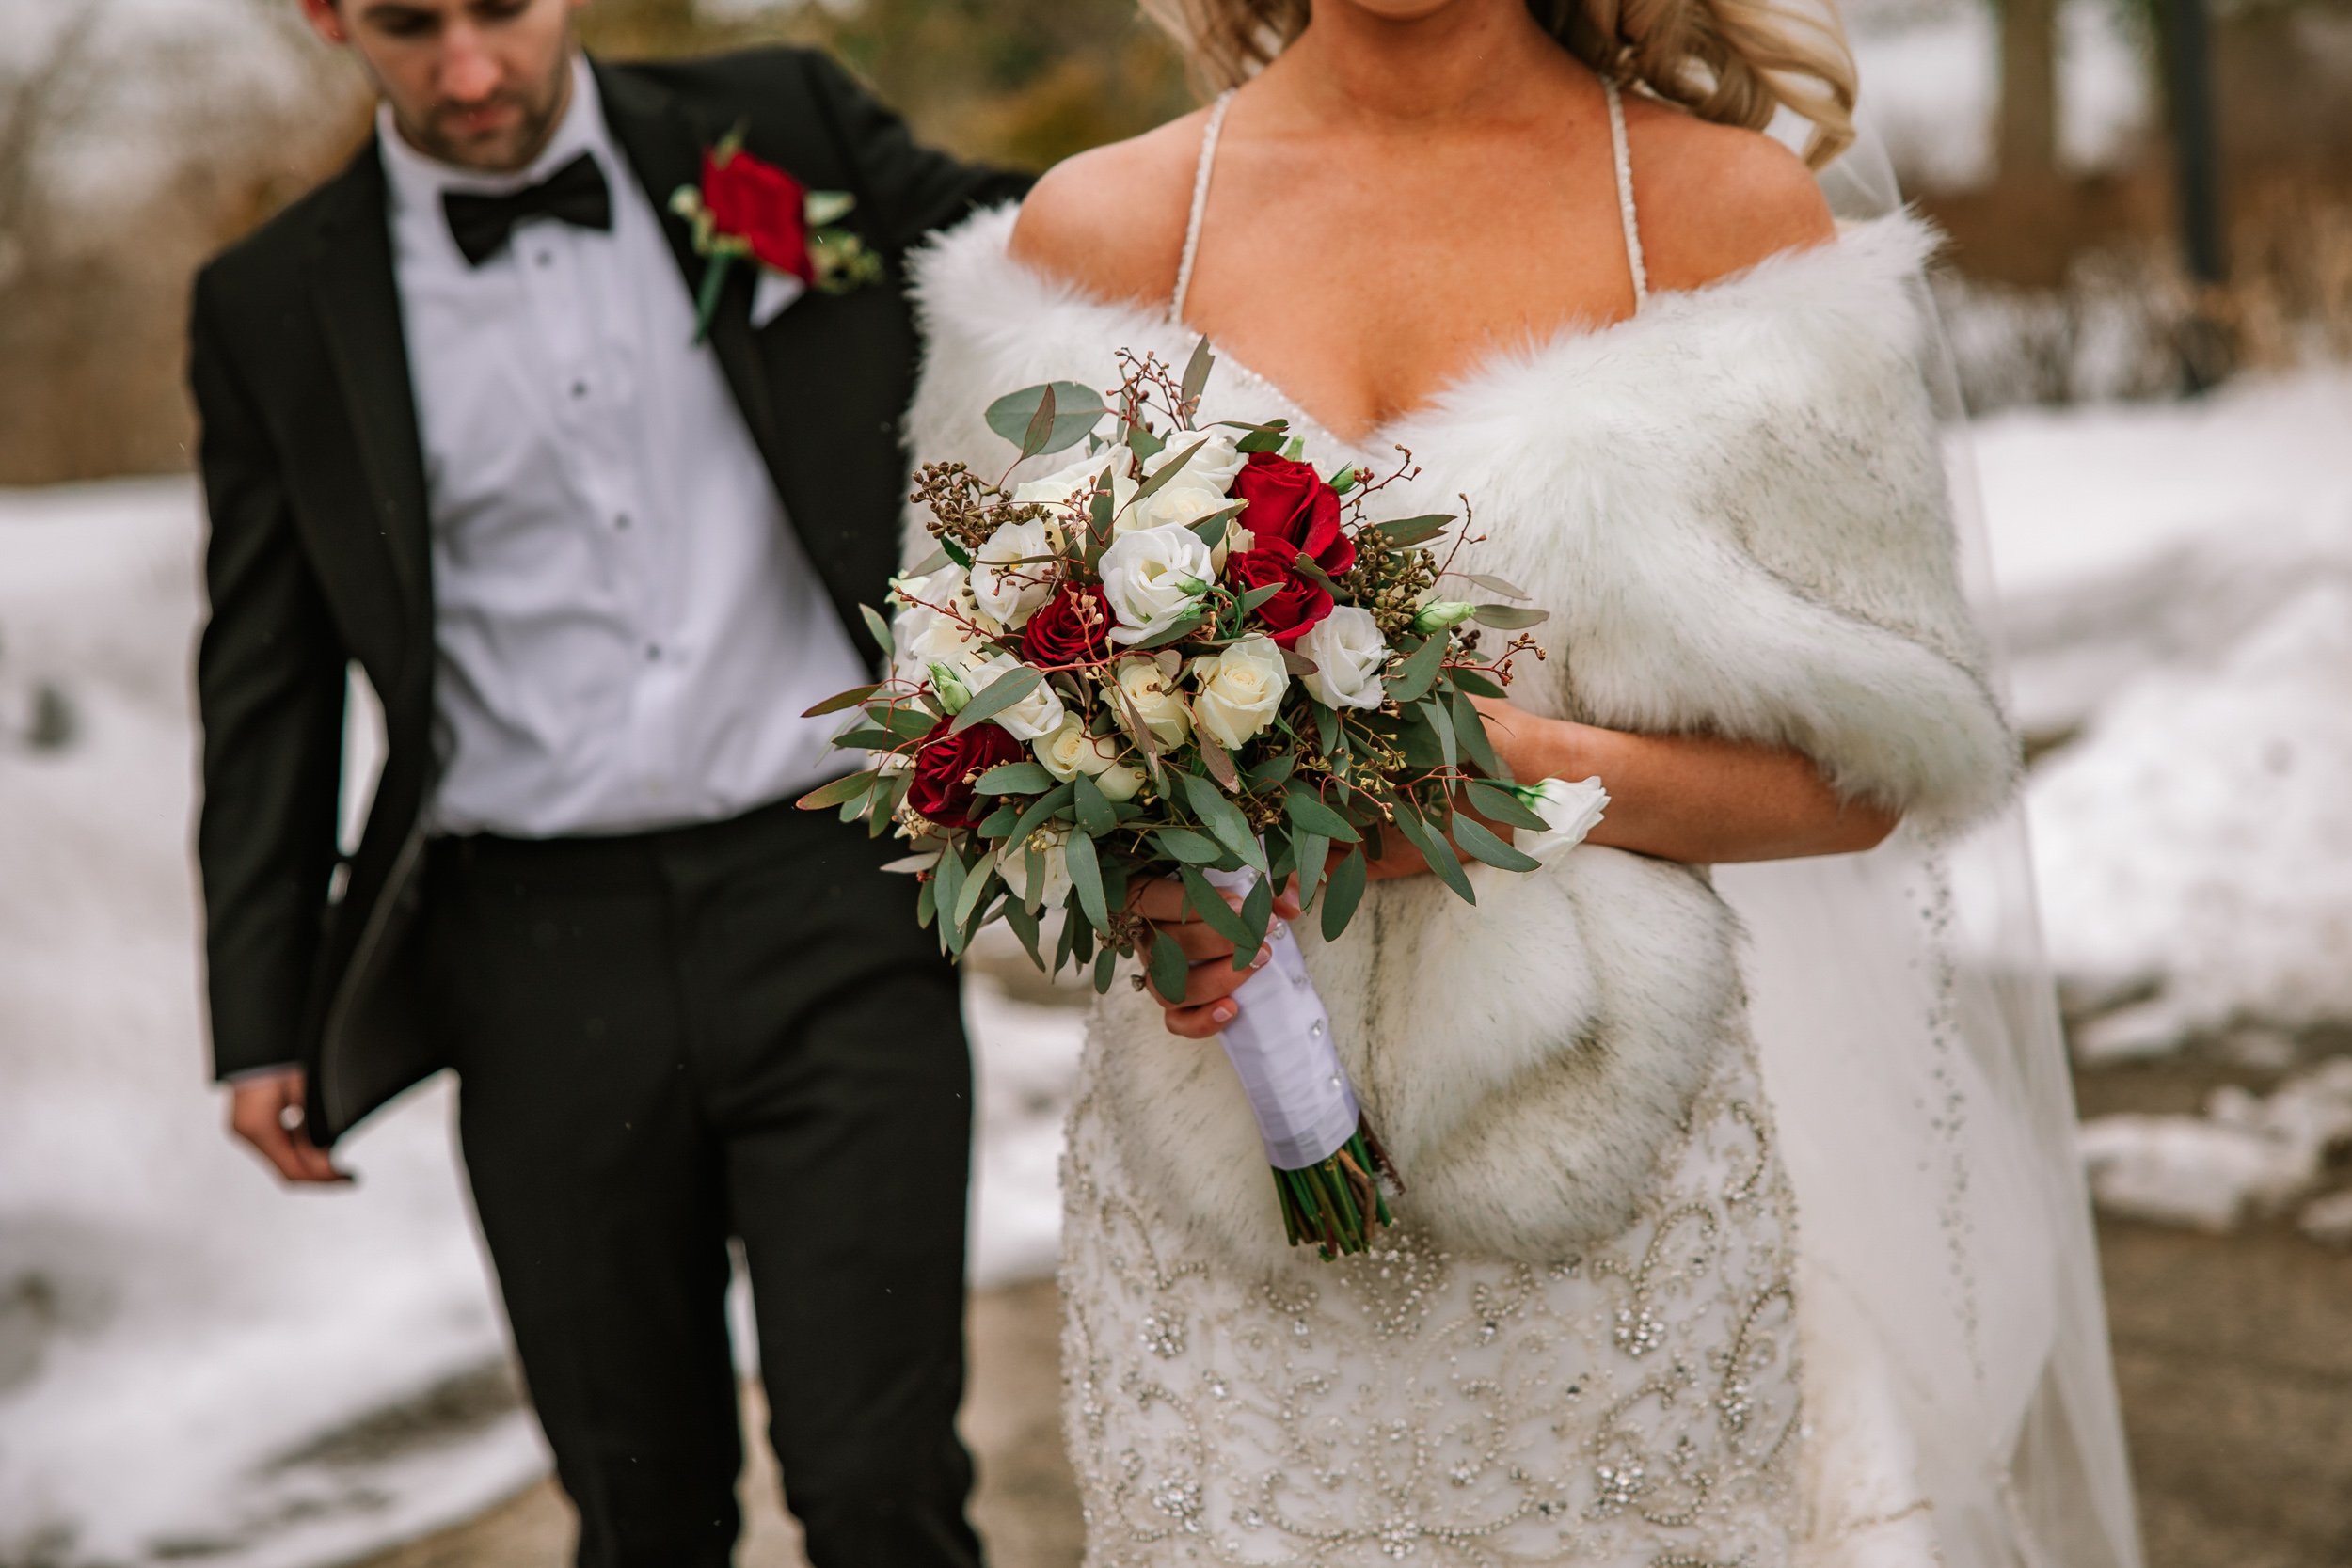 LUCEINS MANOR WEDDING PHOTOGRAPHY - FEB 2021 - 39.jpg